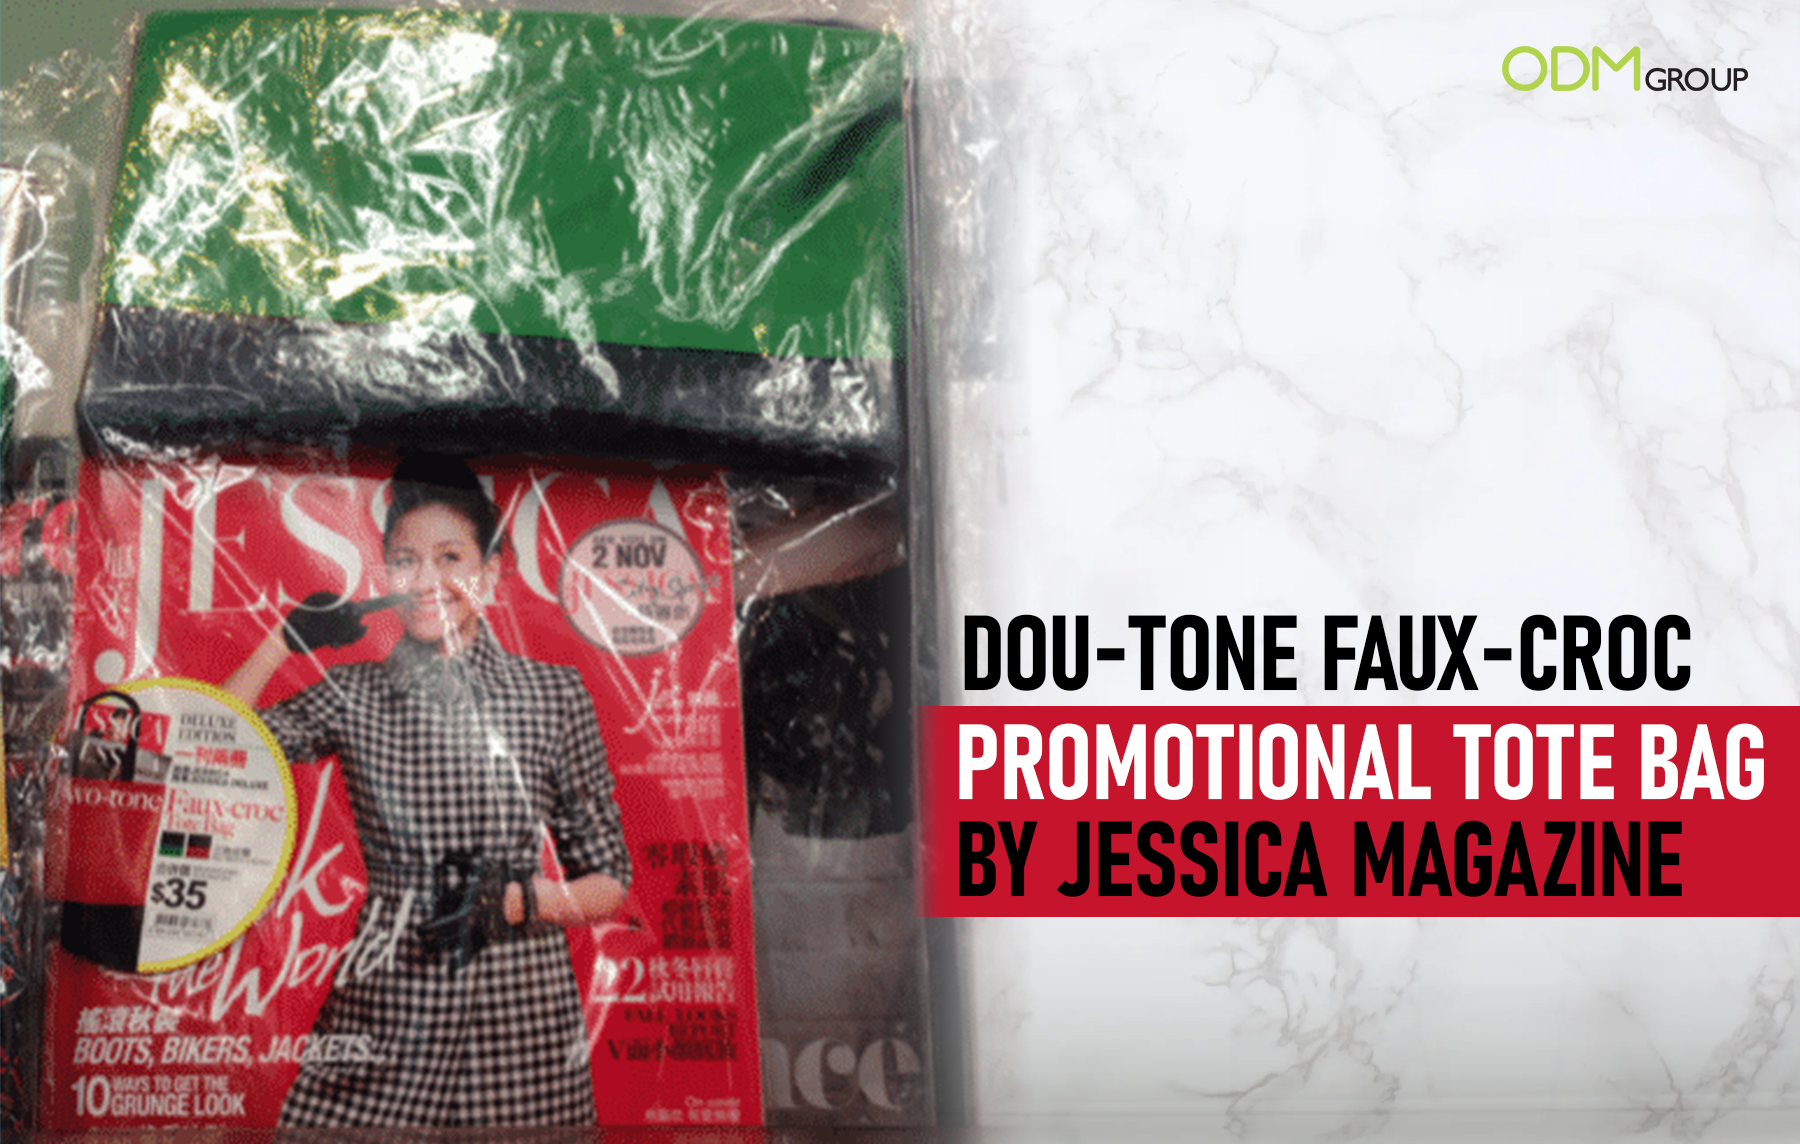 Jessica Magazine Tote Bag Promotion